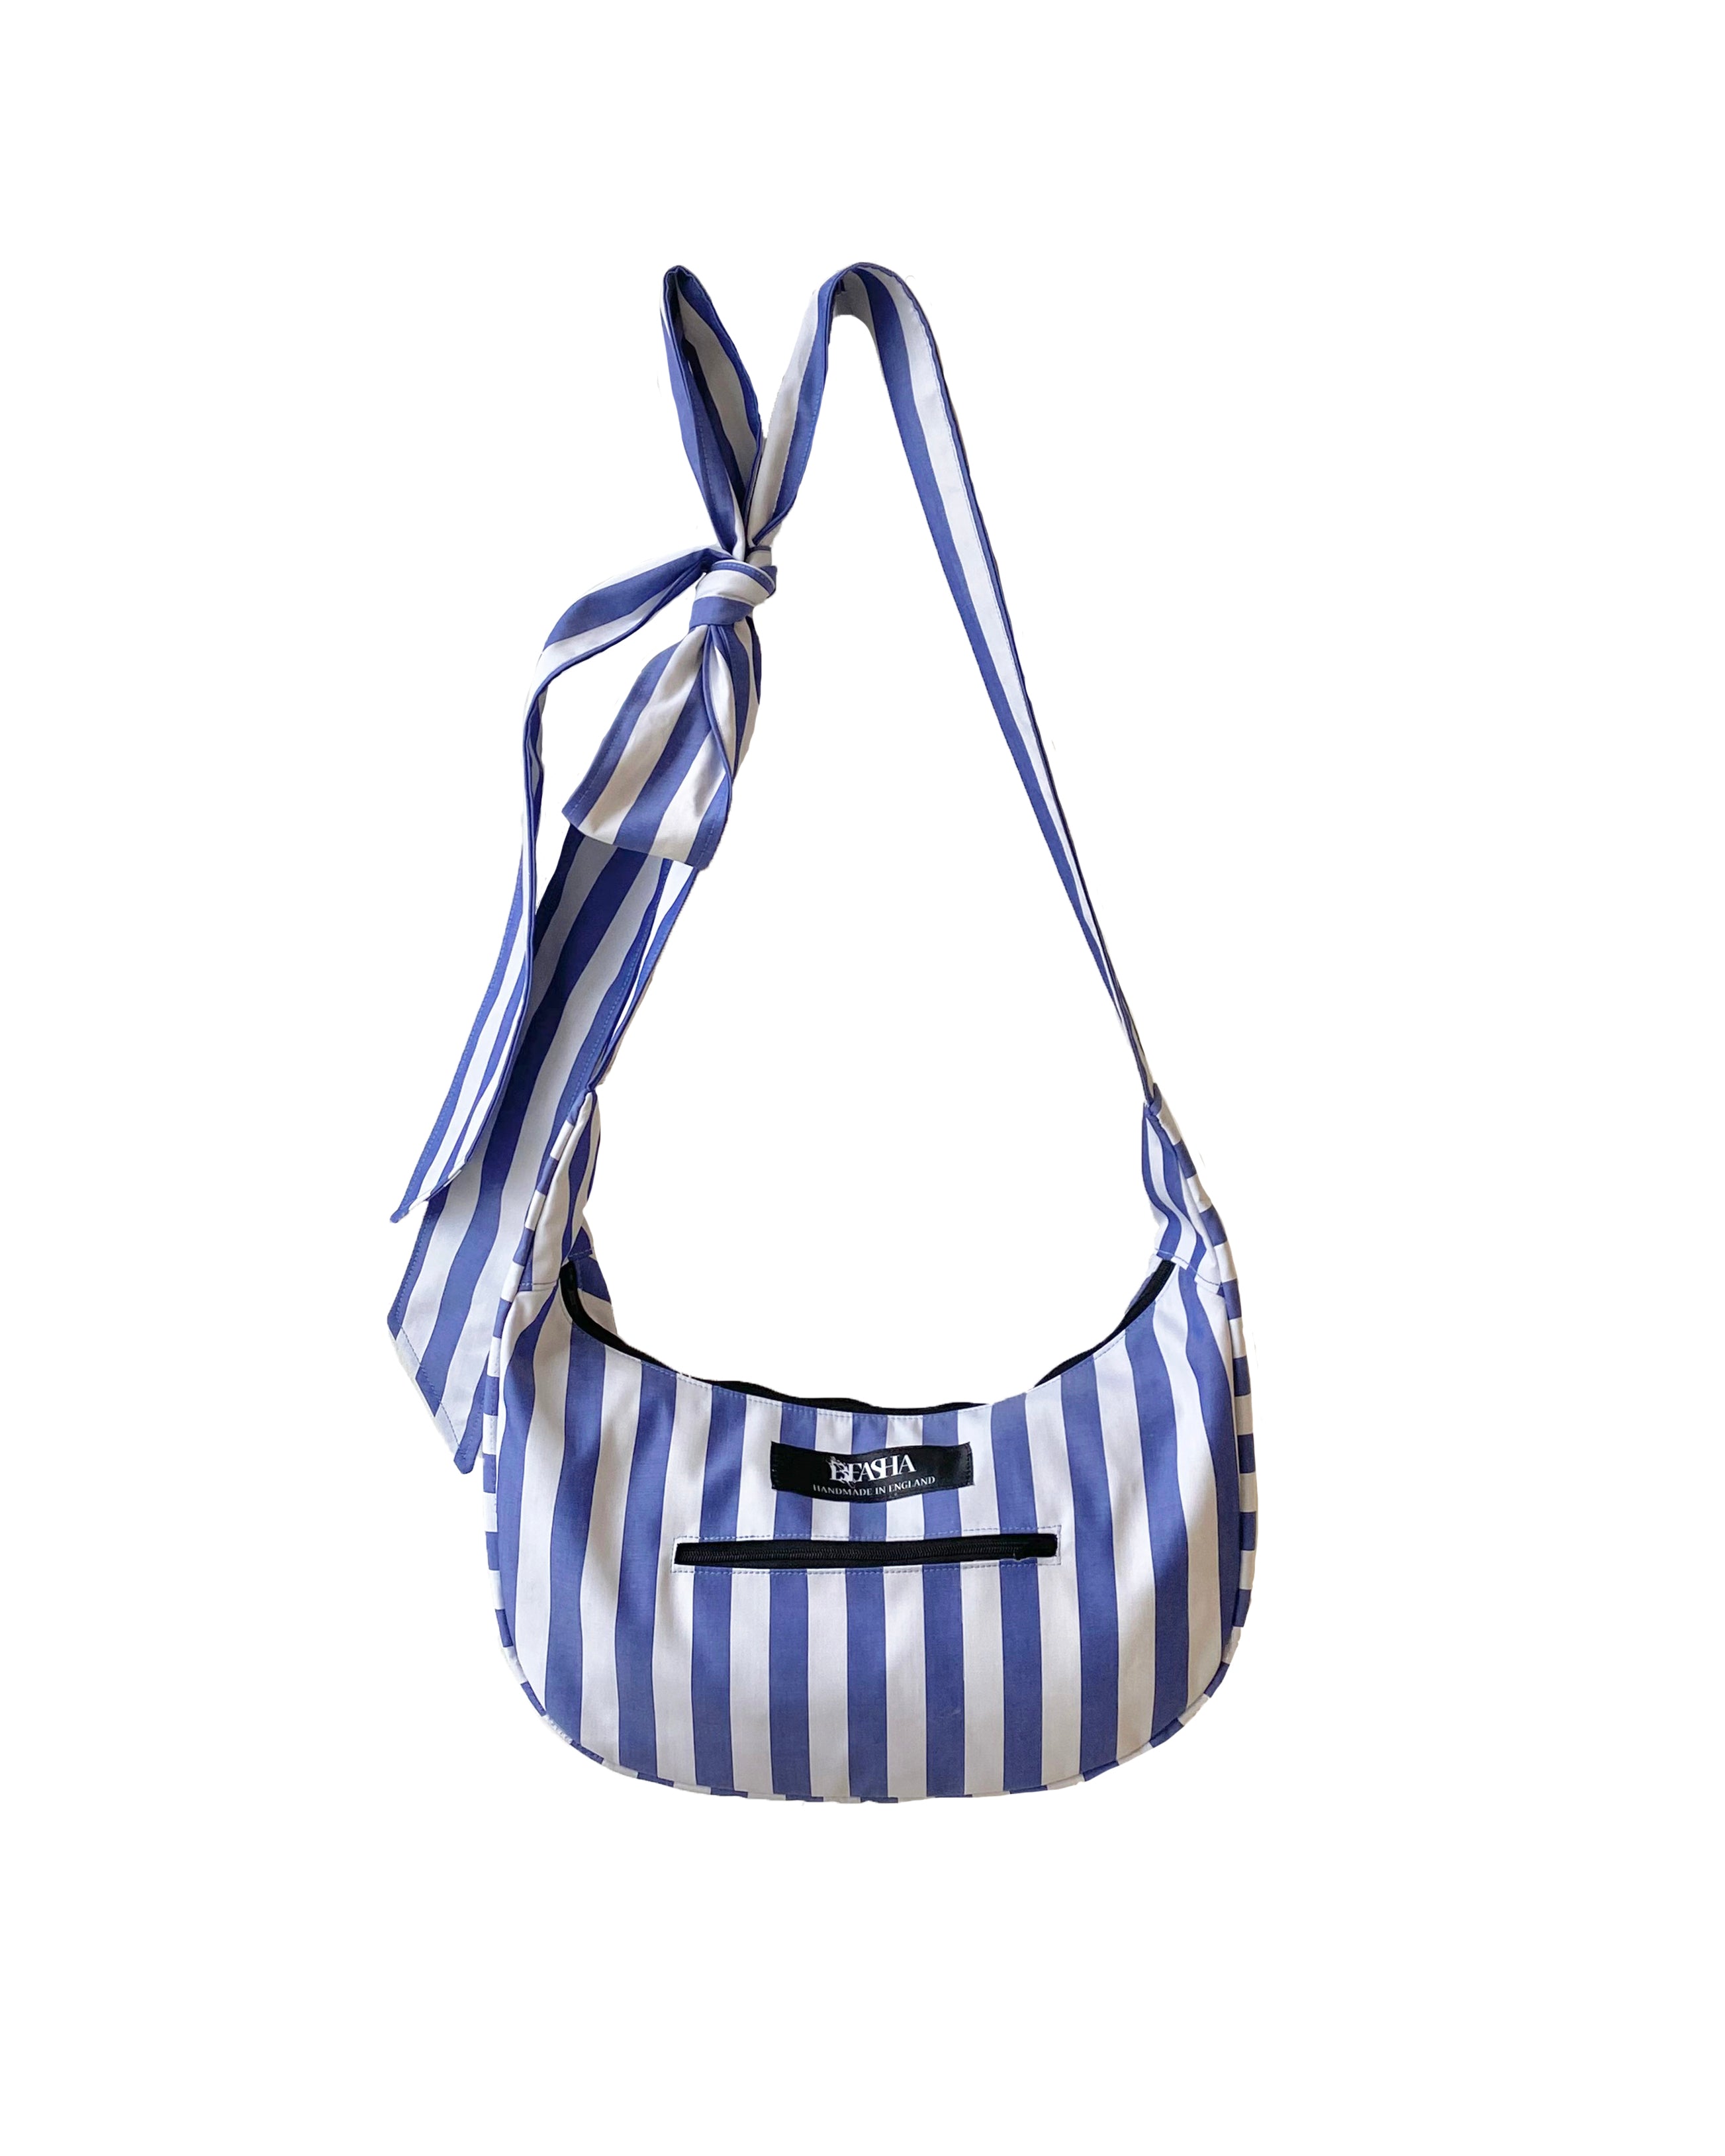 The Milo Bag in Blueberry Stripe